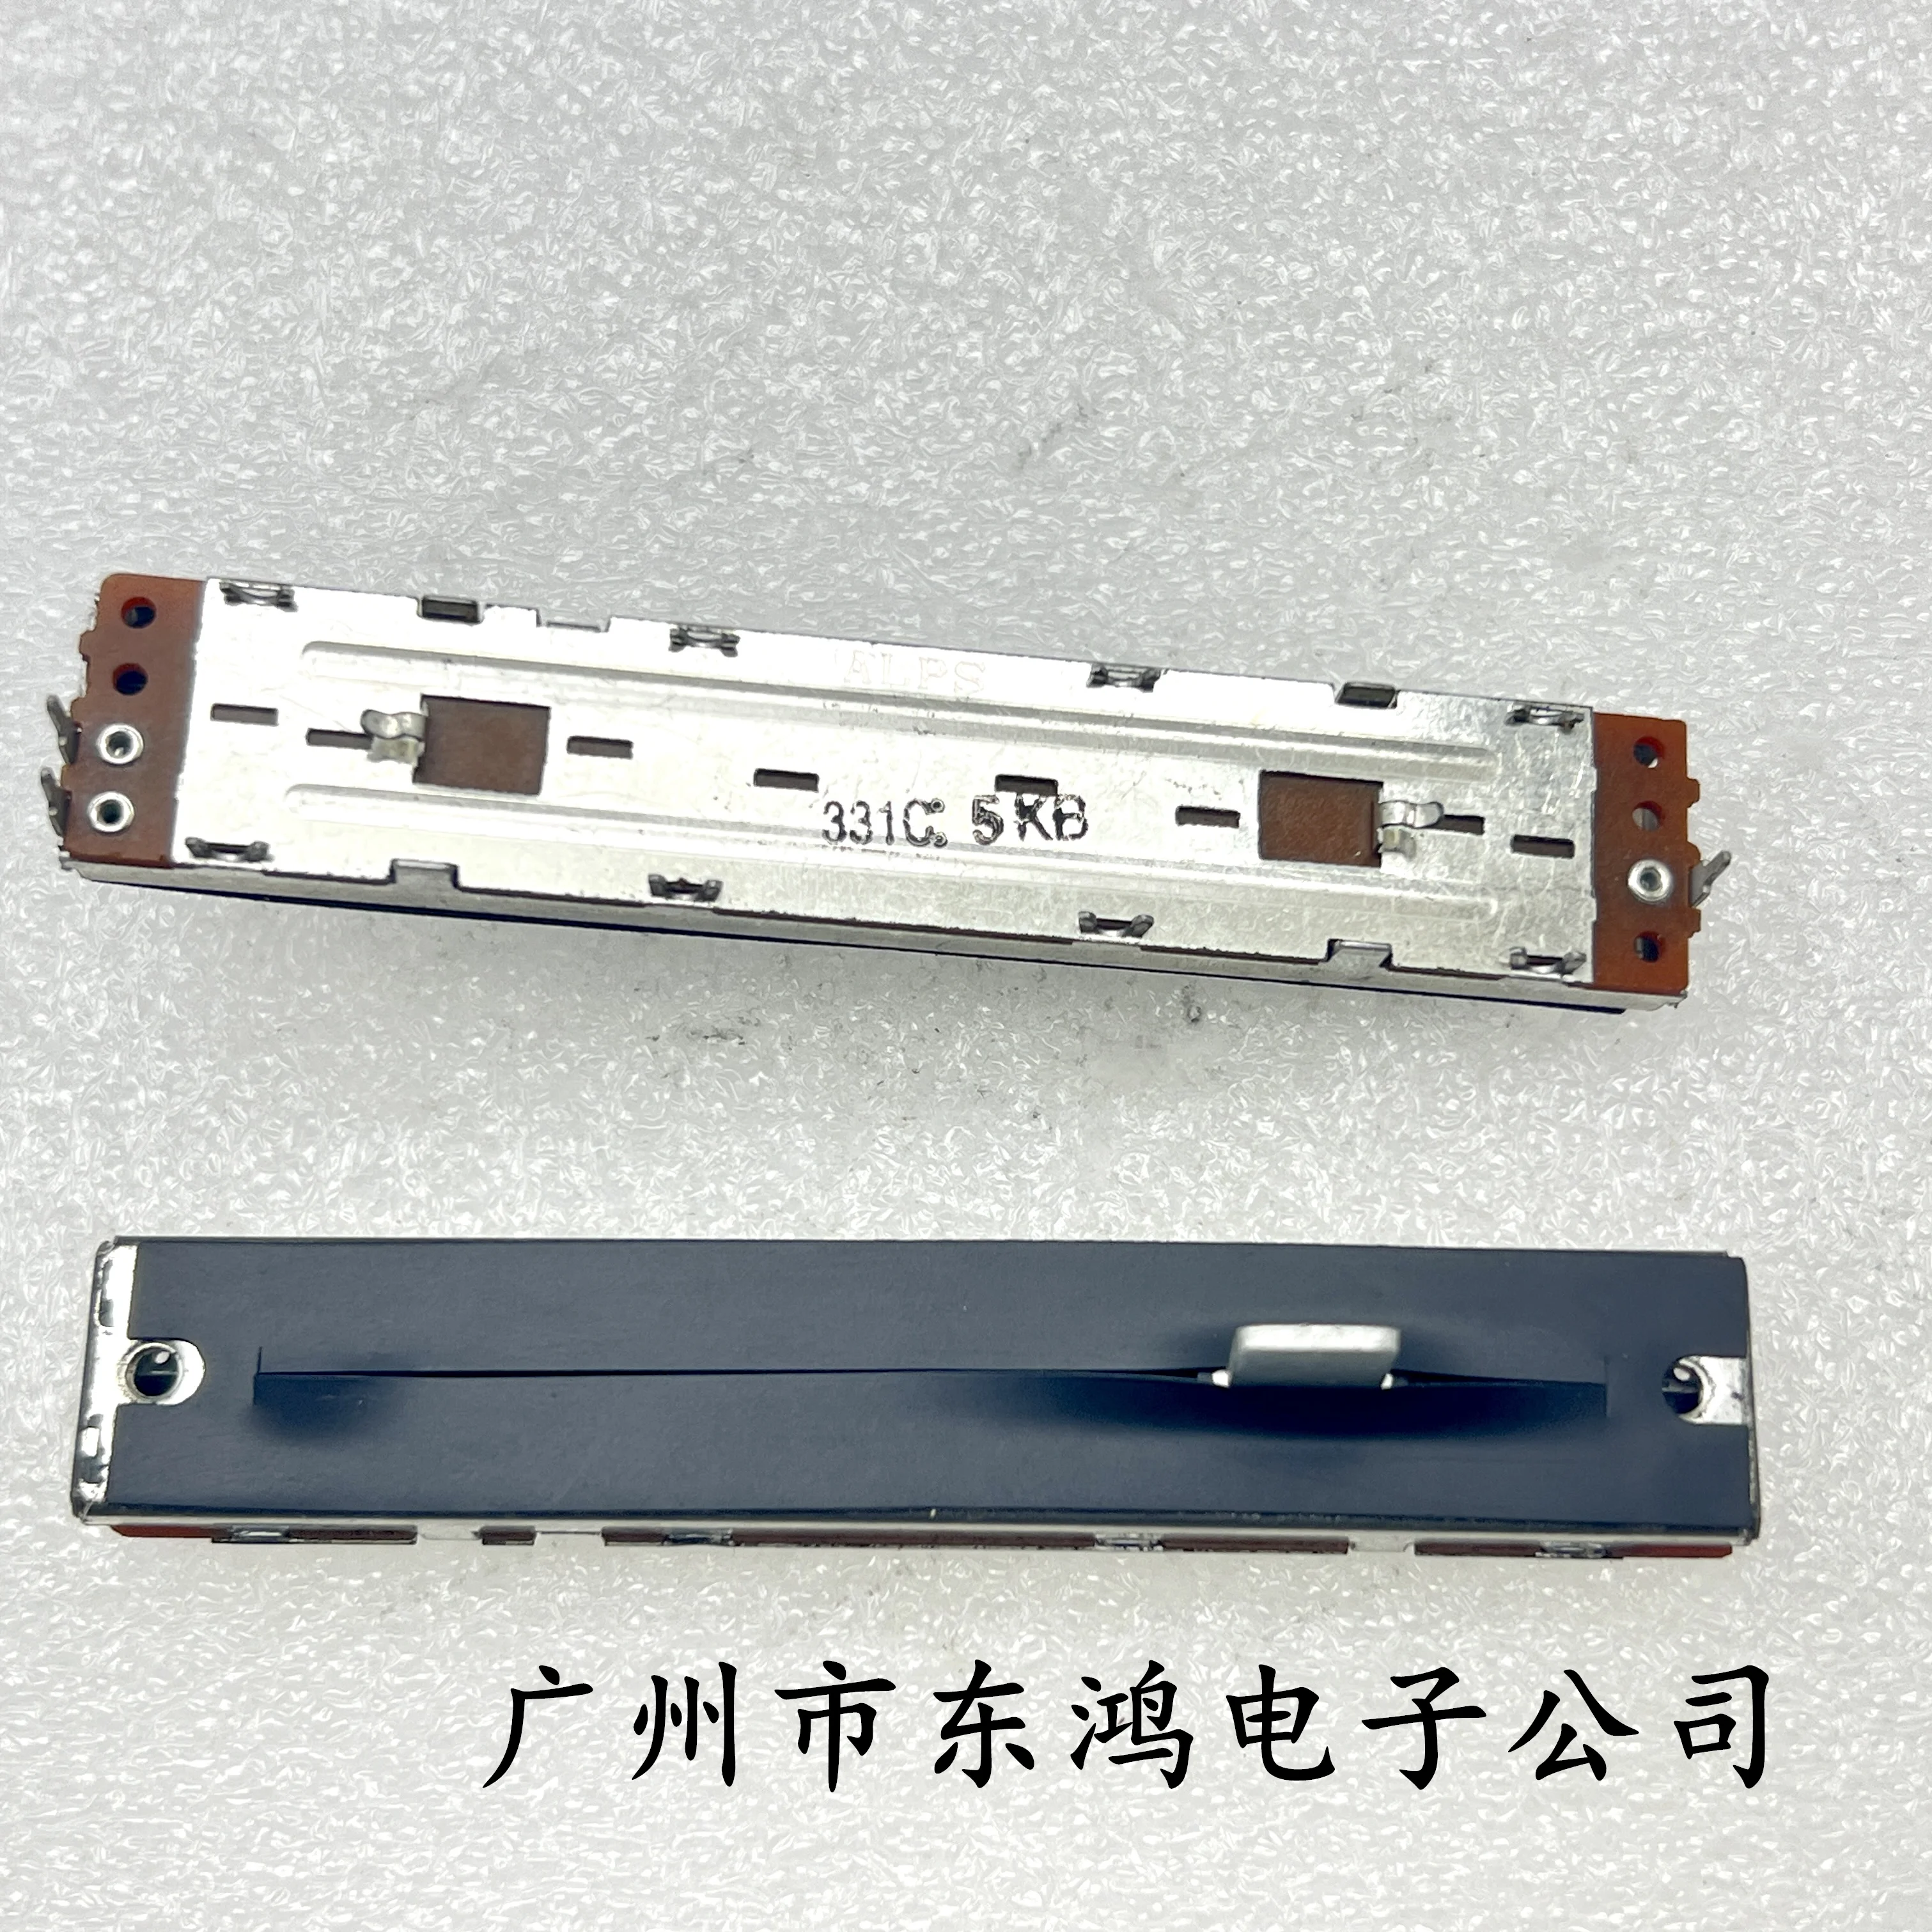 1 ШТ Япония 88 мм потенциометр прямого скольжения B5K длина вала 12 мм